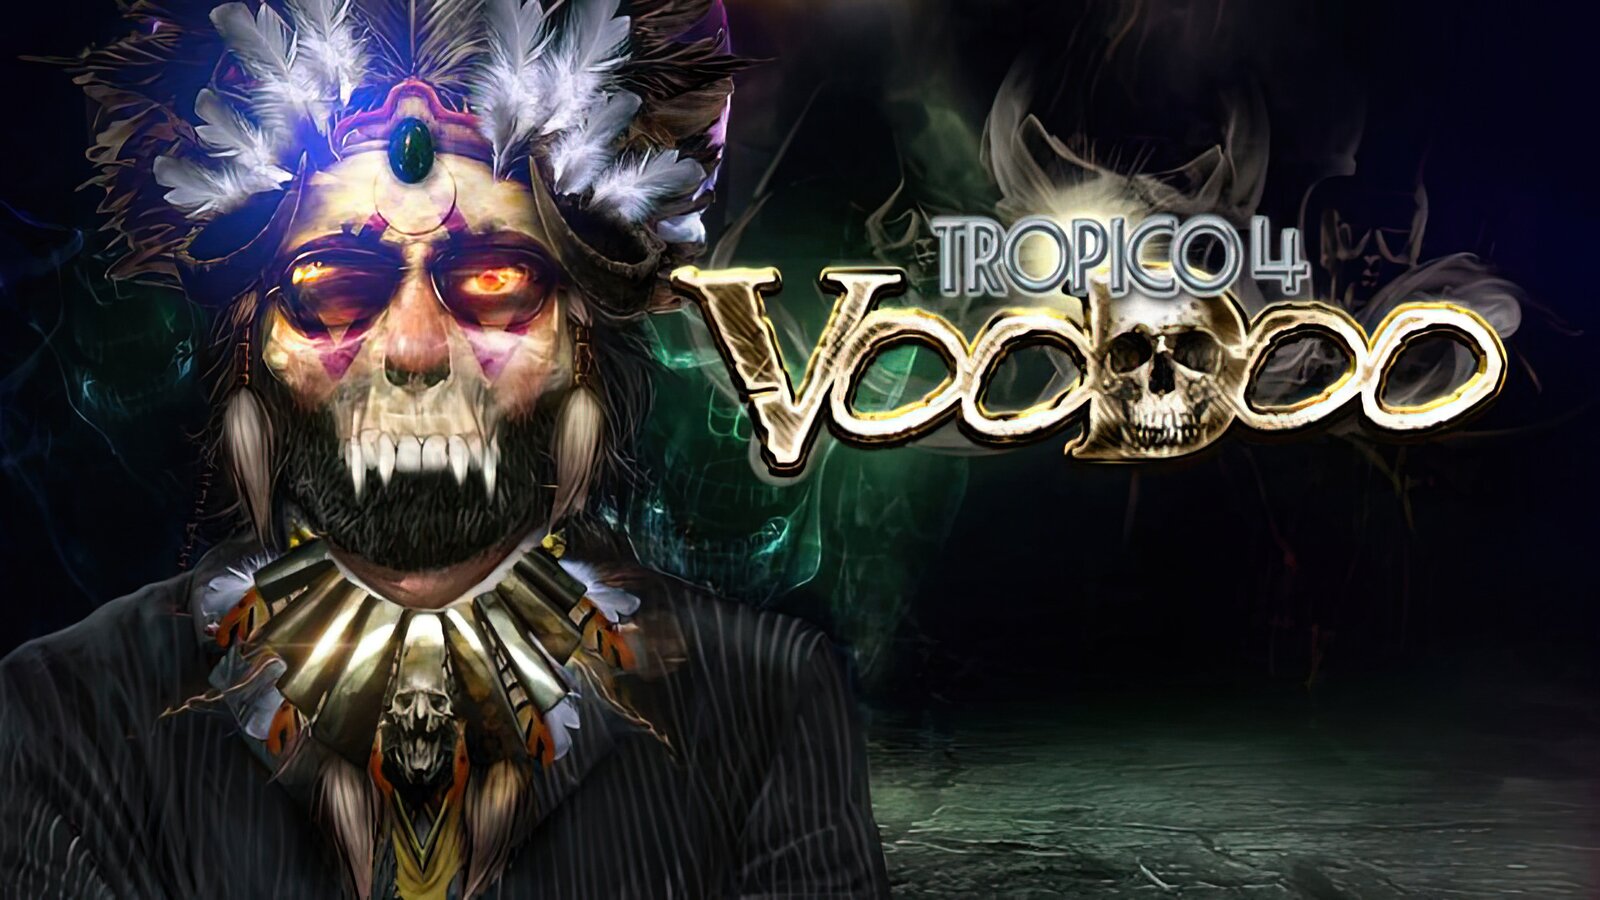 Tropico 4 - Voodoo